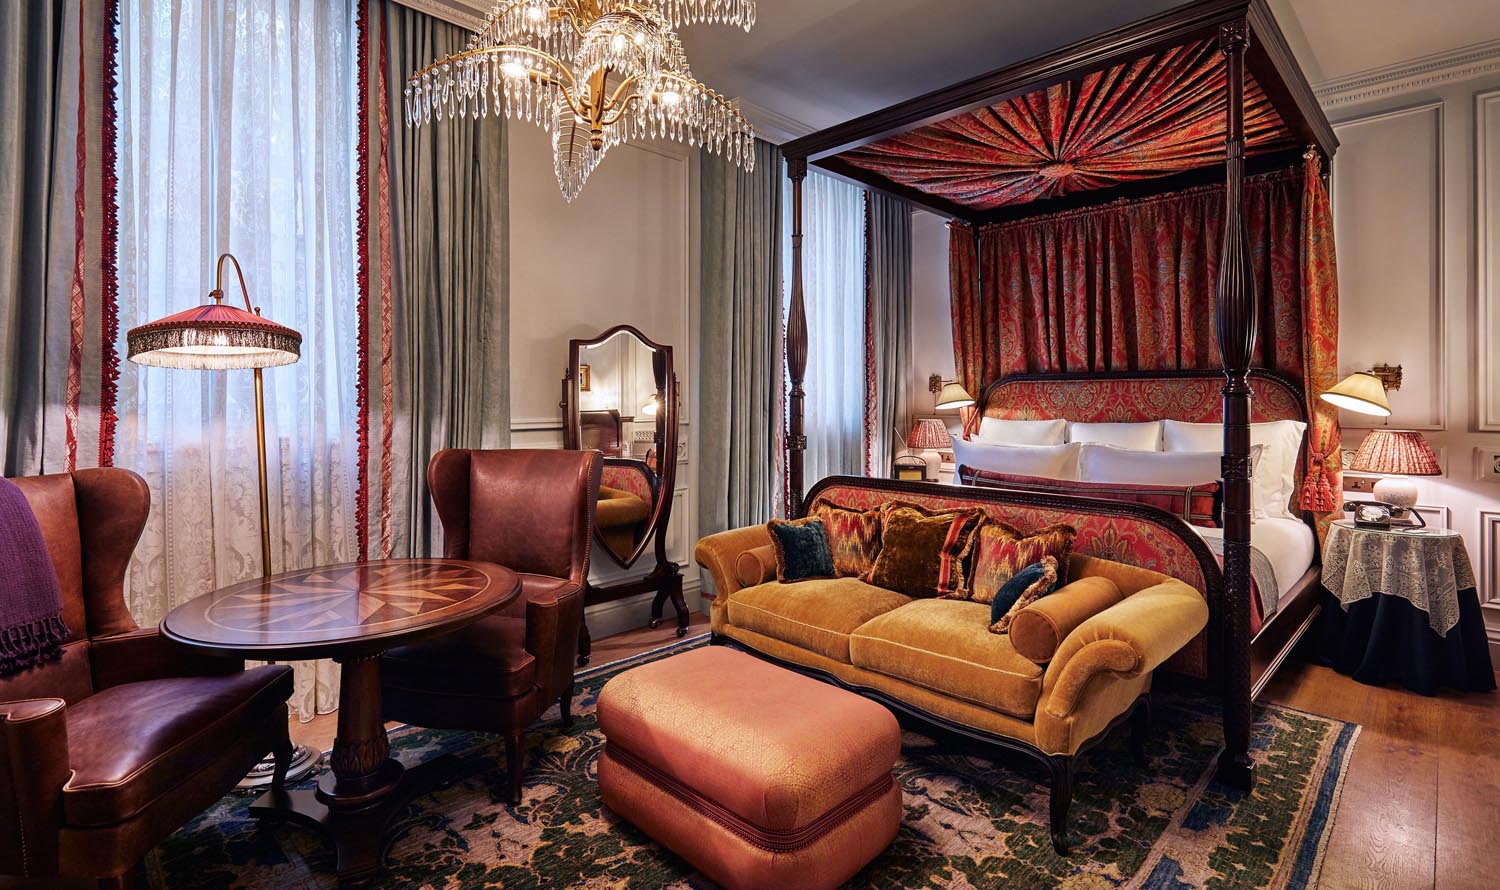 Luxury Hotels with Superior Interior Decoration